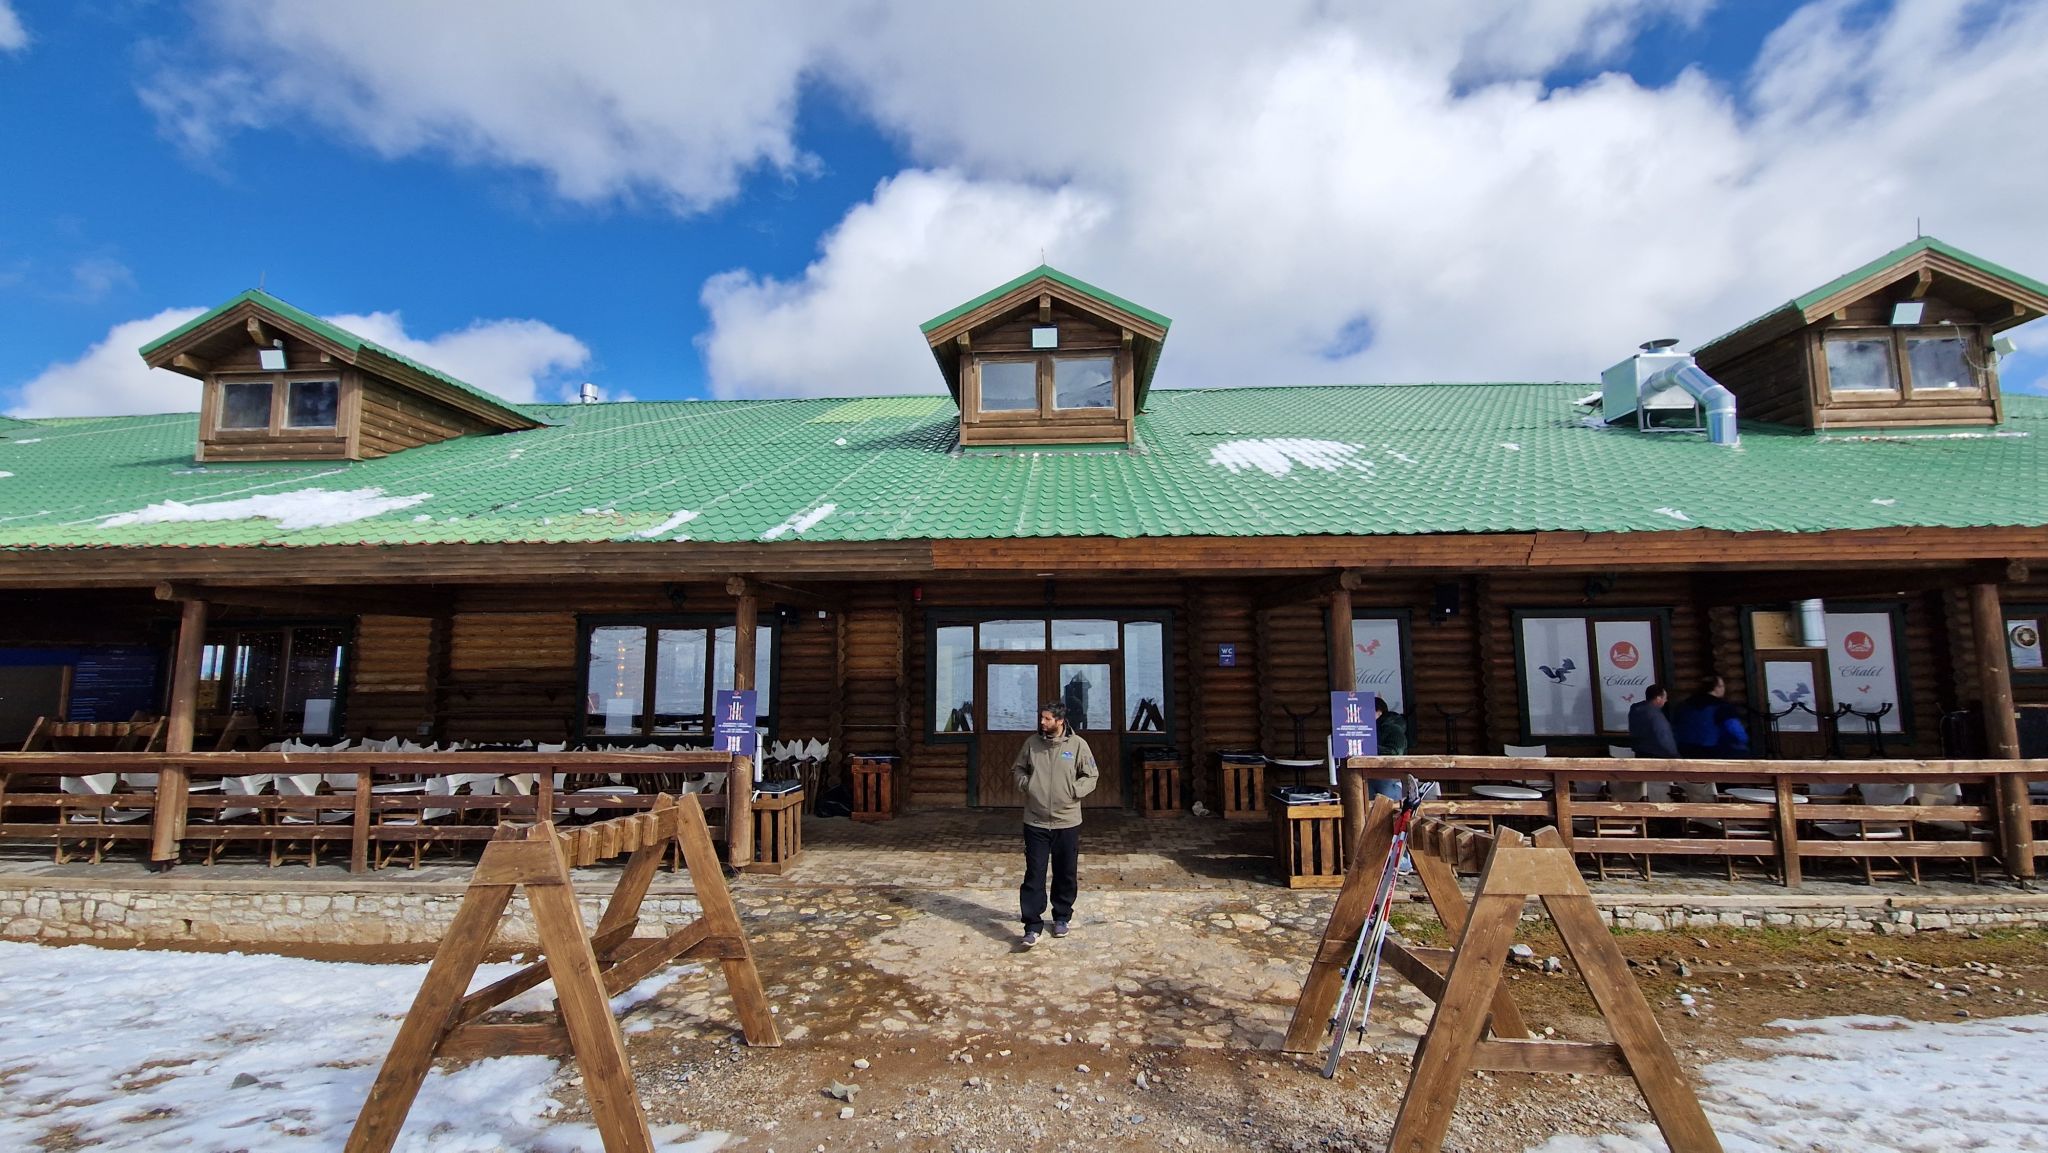 Kalavrita Ski Resort entrance